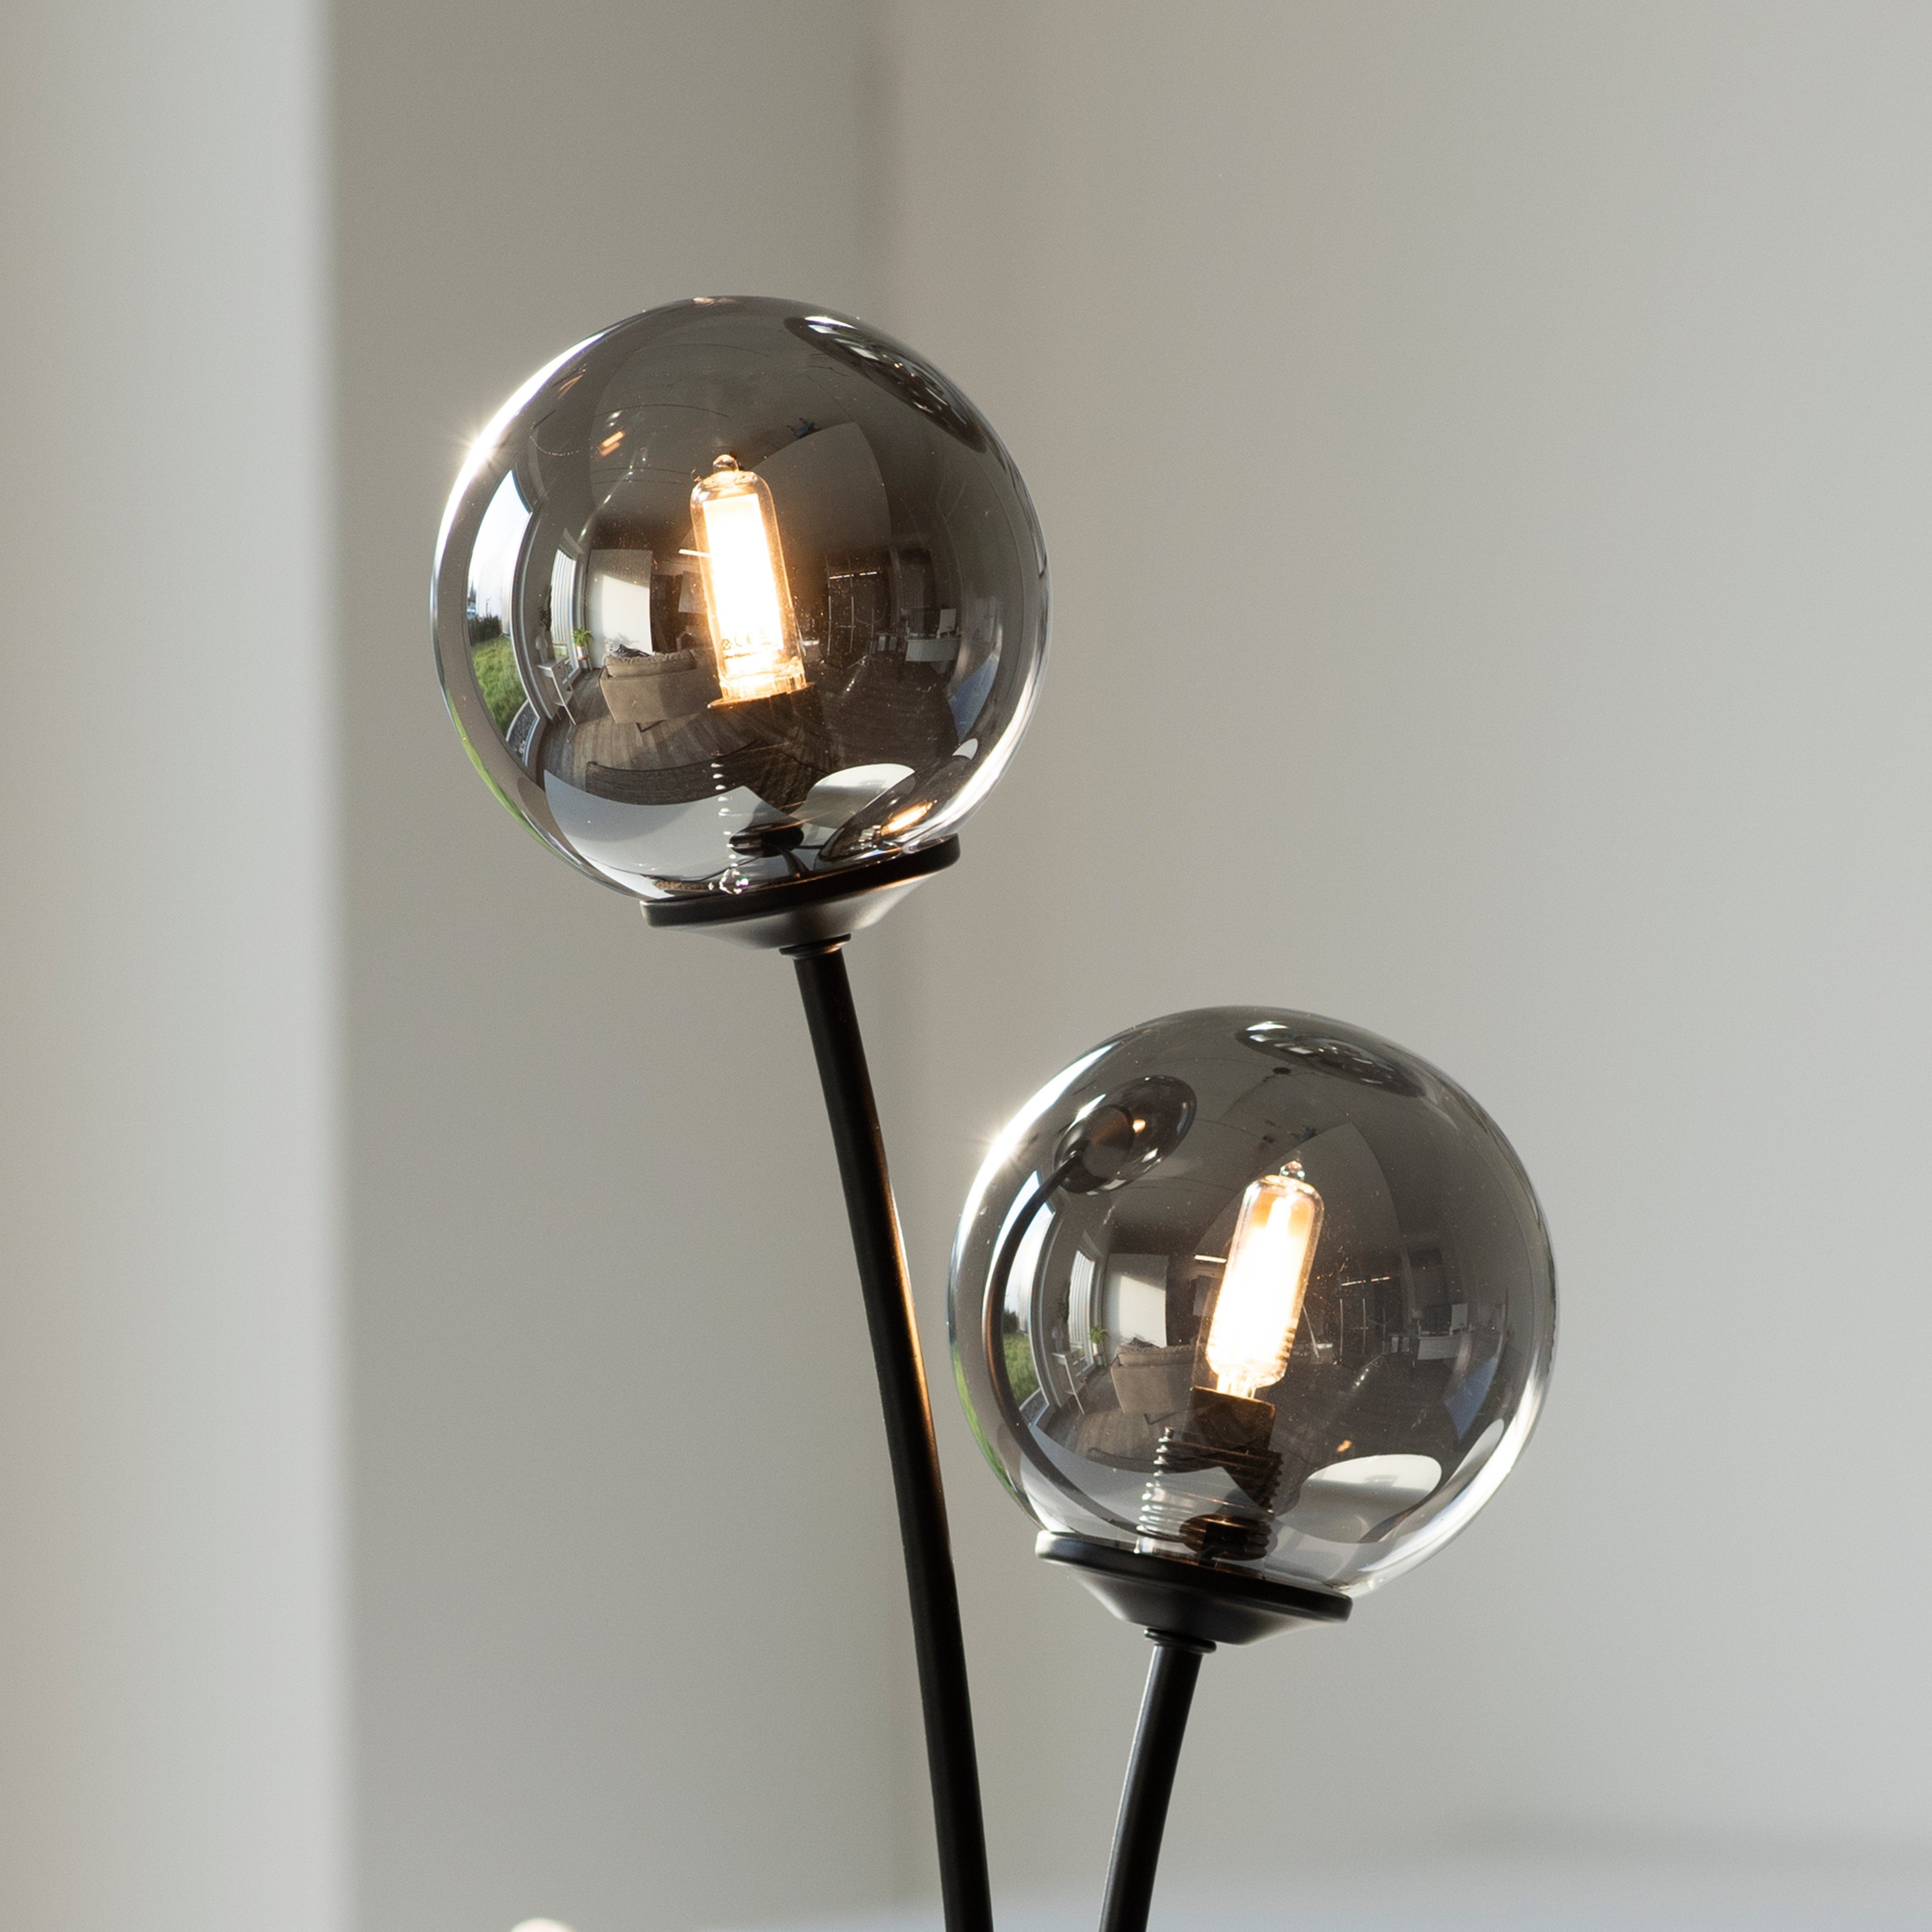 Paul Neuhaus LED Nachttischlampe WIDOW, Warmweiß, Schnurschalter Schalter, LED wechselbar